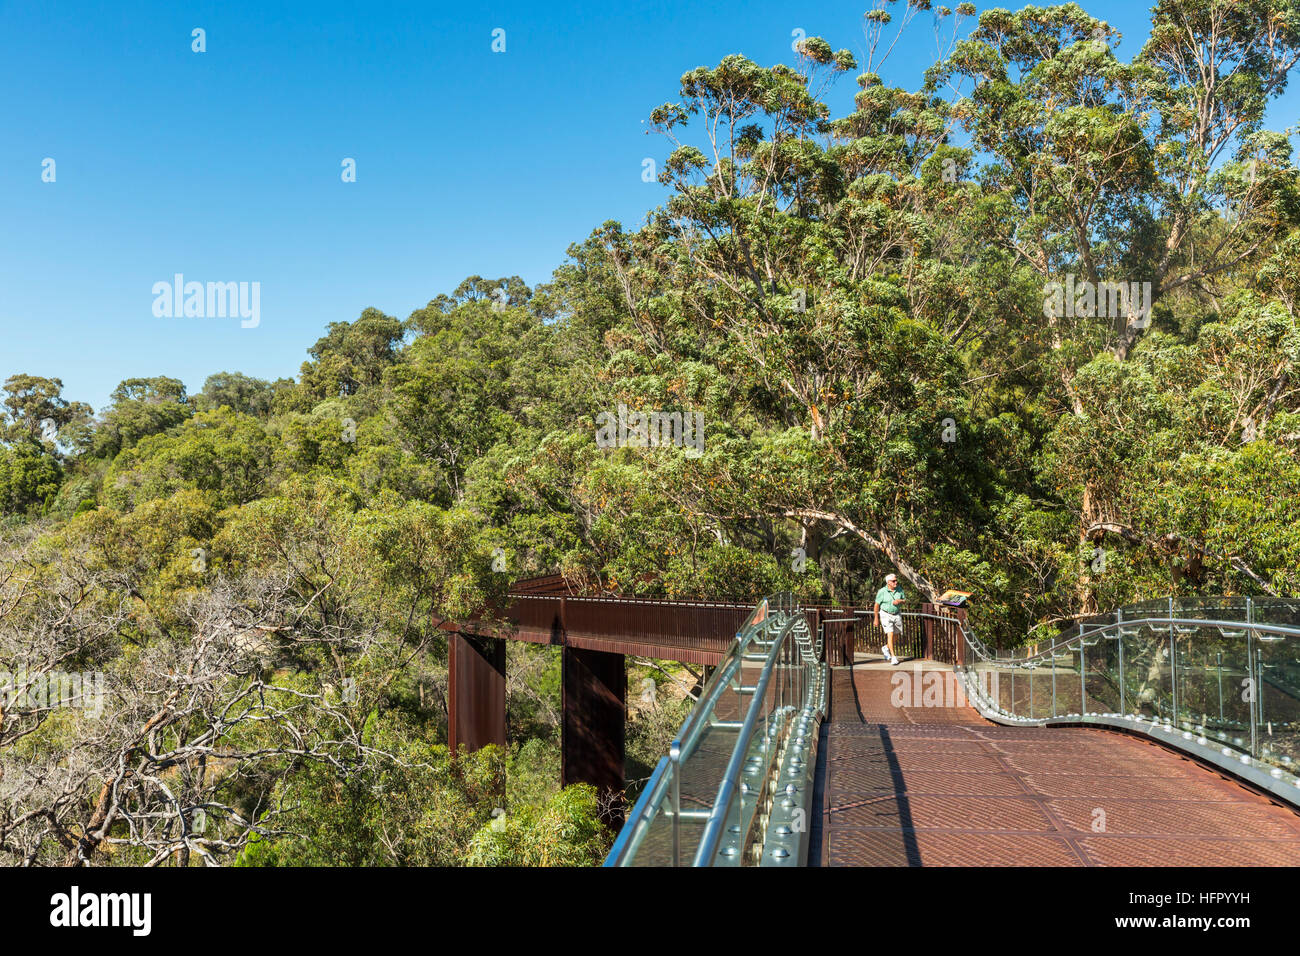 The Lotterywest Federation Walkway in Kings Park, Perth, Western Australia, Australia Stock Photo